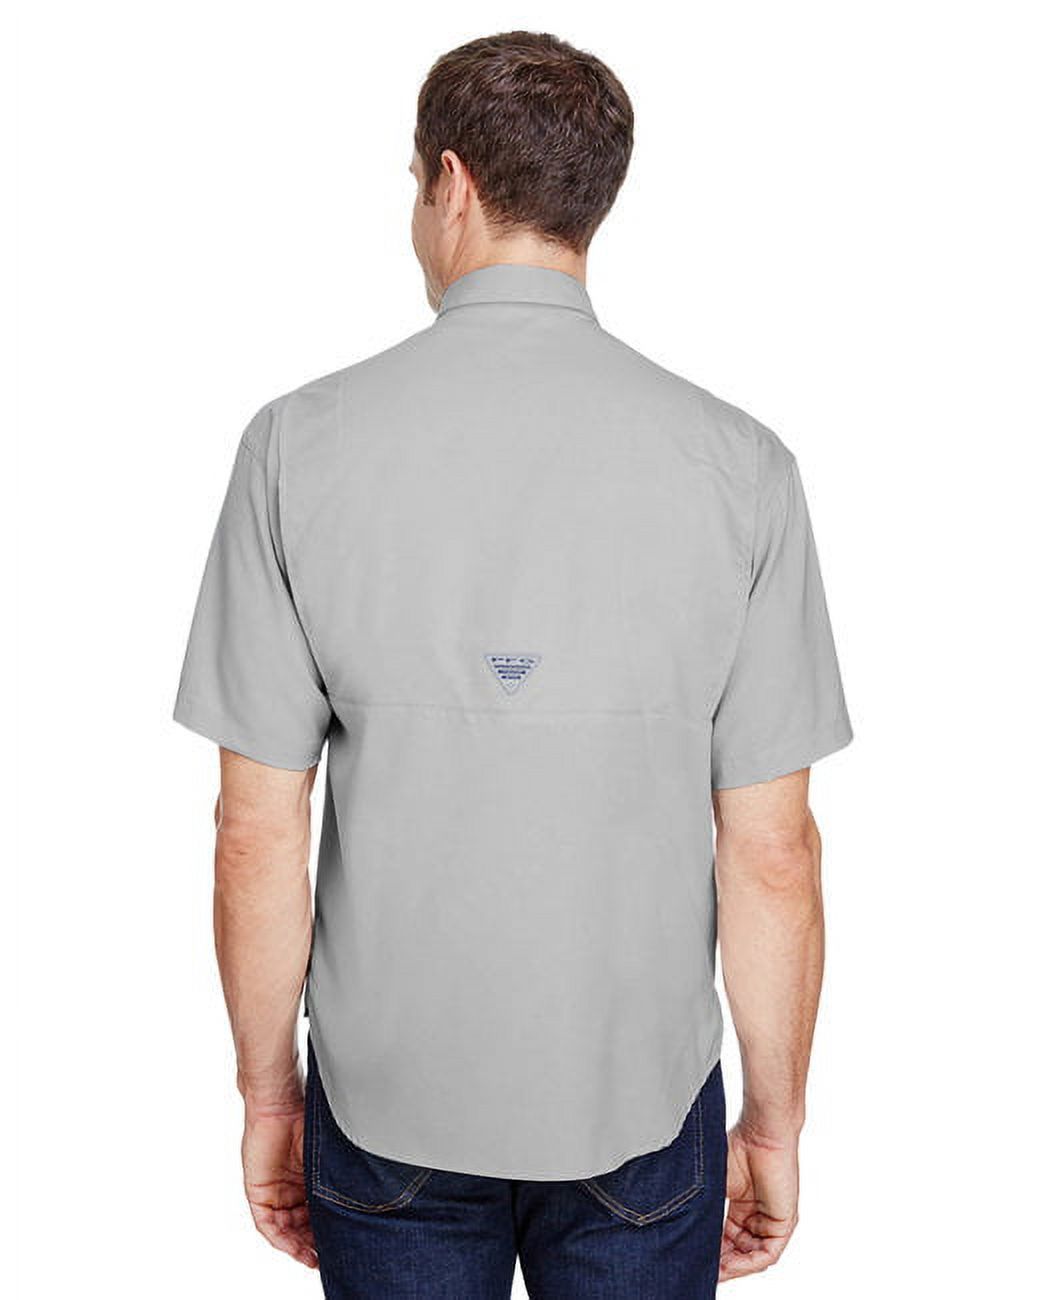 Columbia 7266 Men's Tamiami II Short-Sleeve Shirt - image 2 of 3